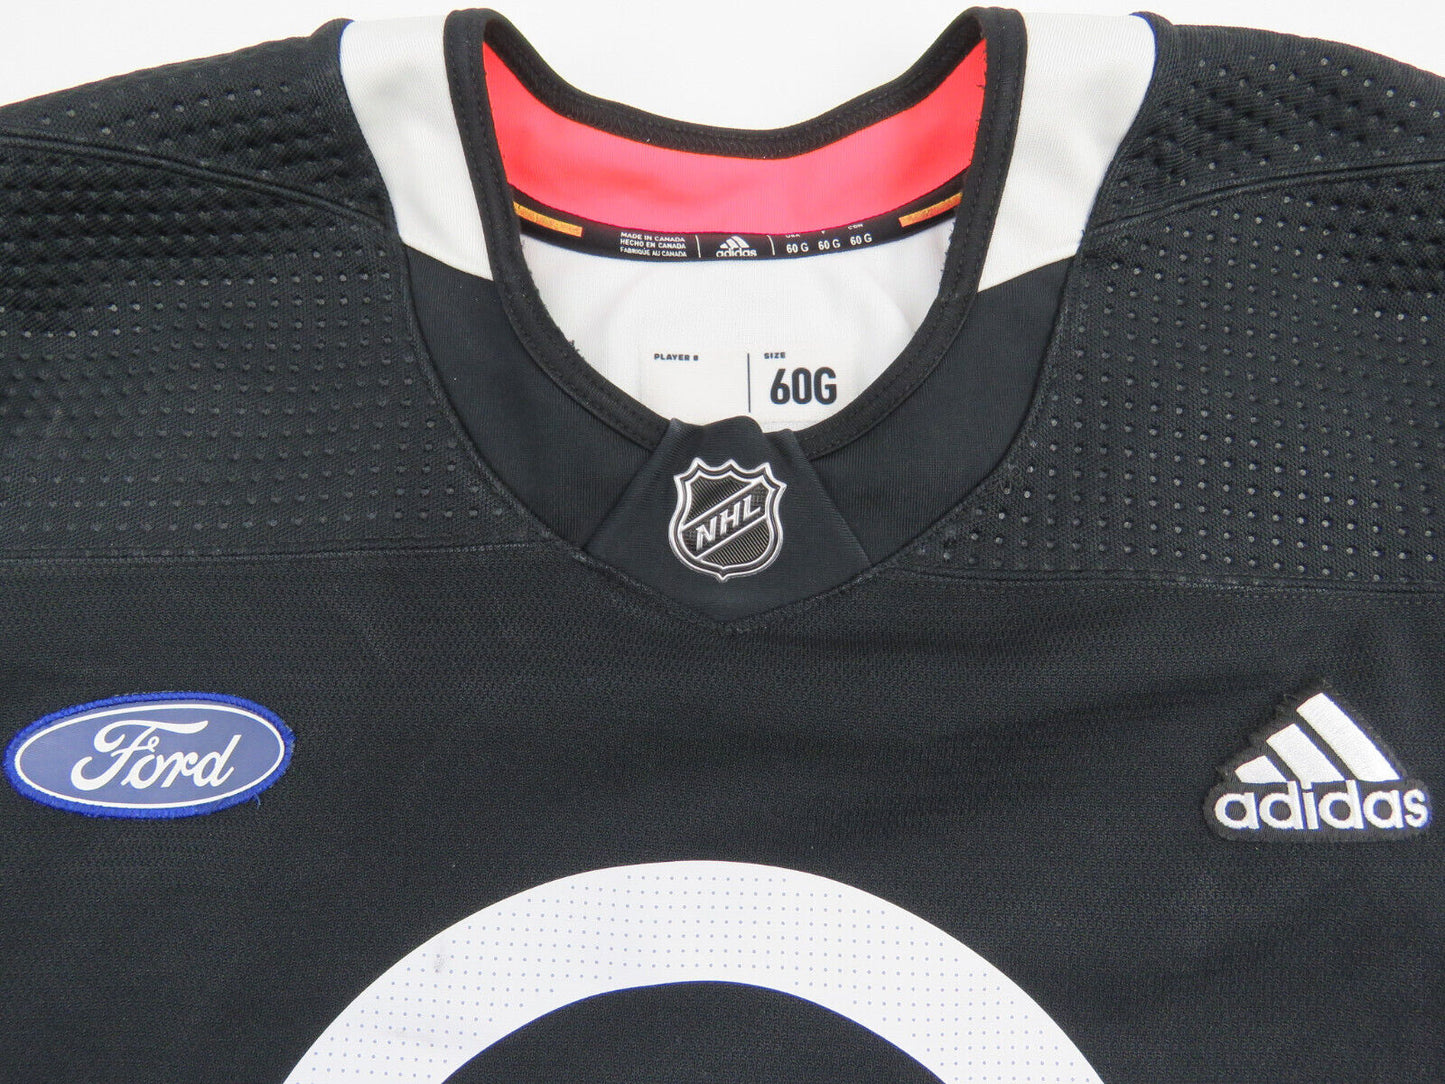 Adidas Toronto Maple Leafs ST PATS Pro NHL Practice Hockey Jersey 60 GOALIE